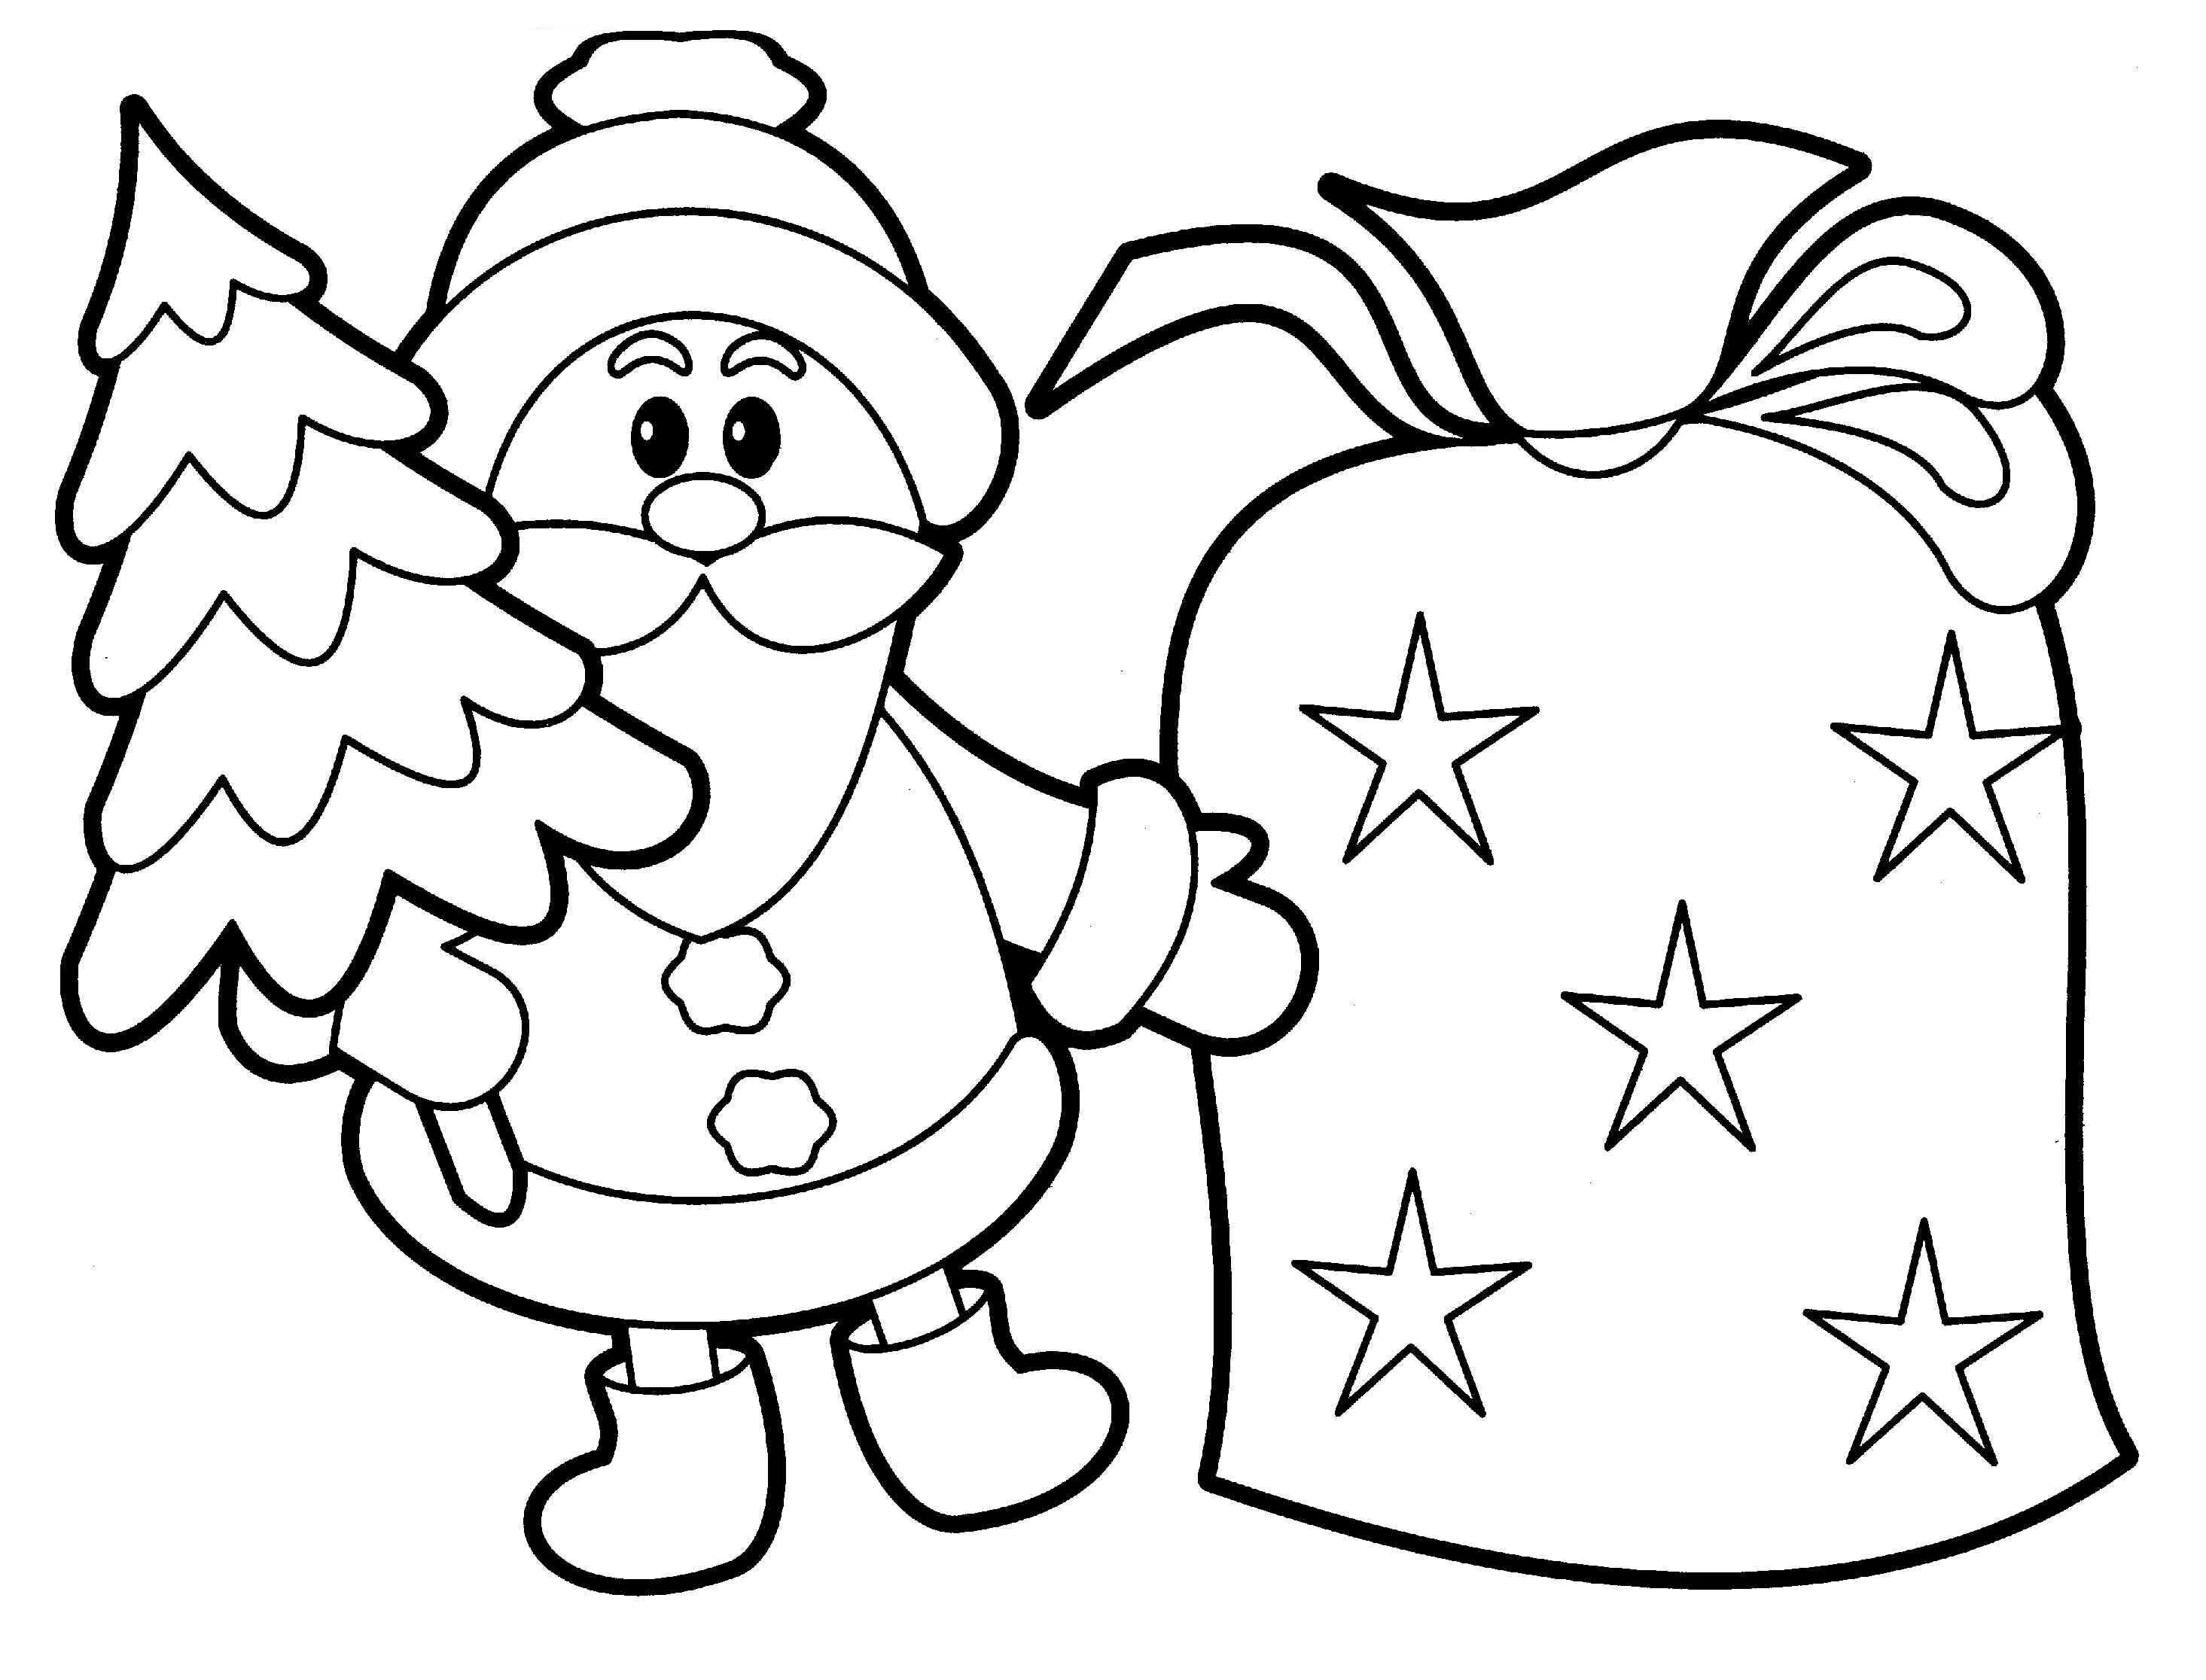 Santa claus funny coloring book